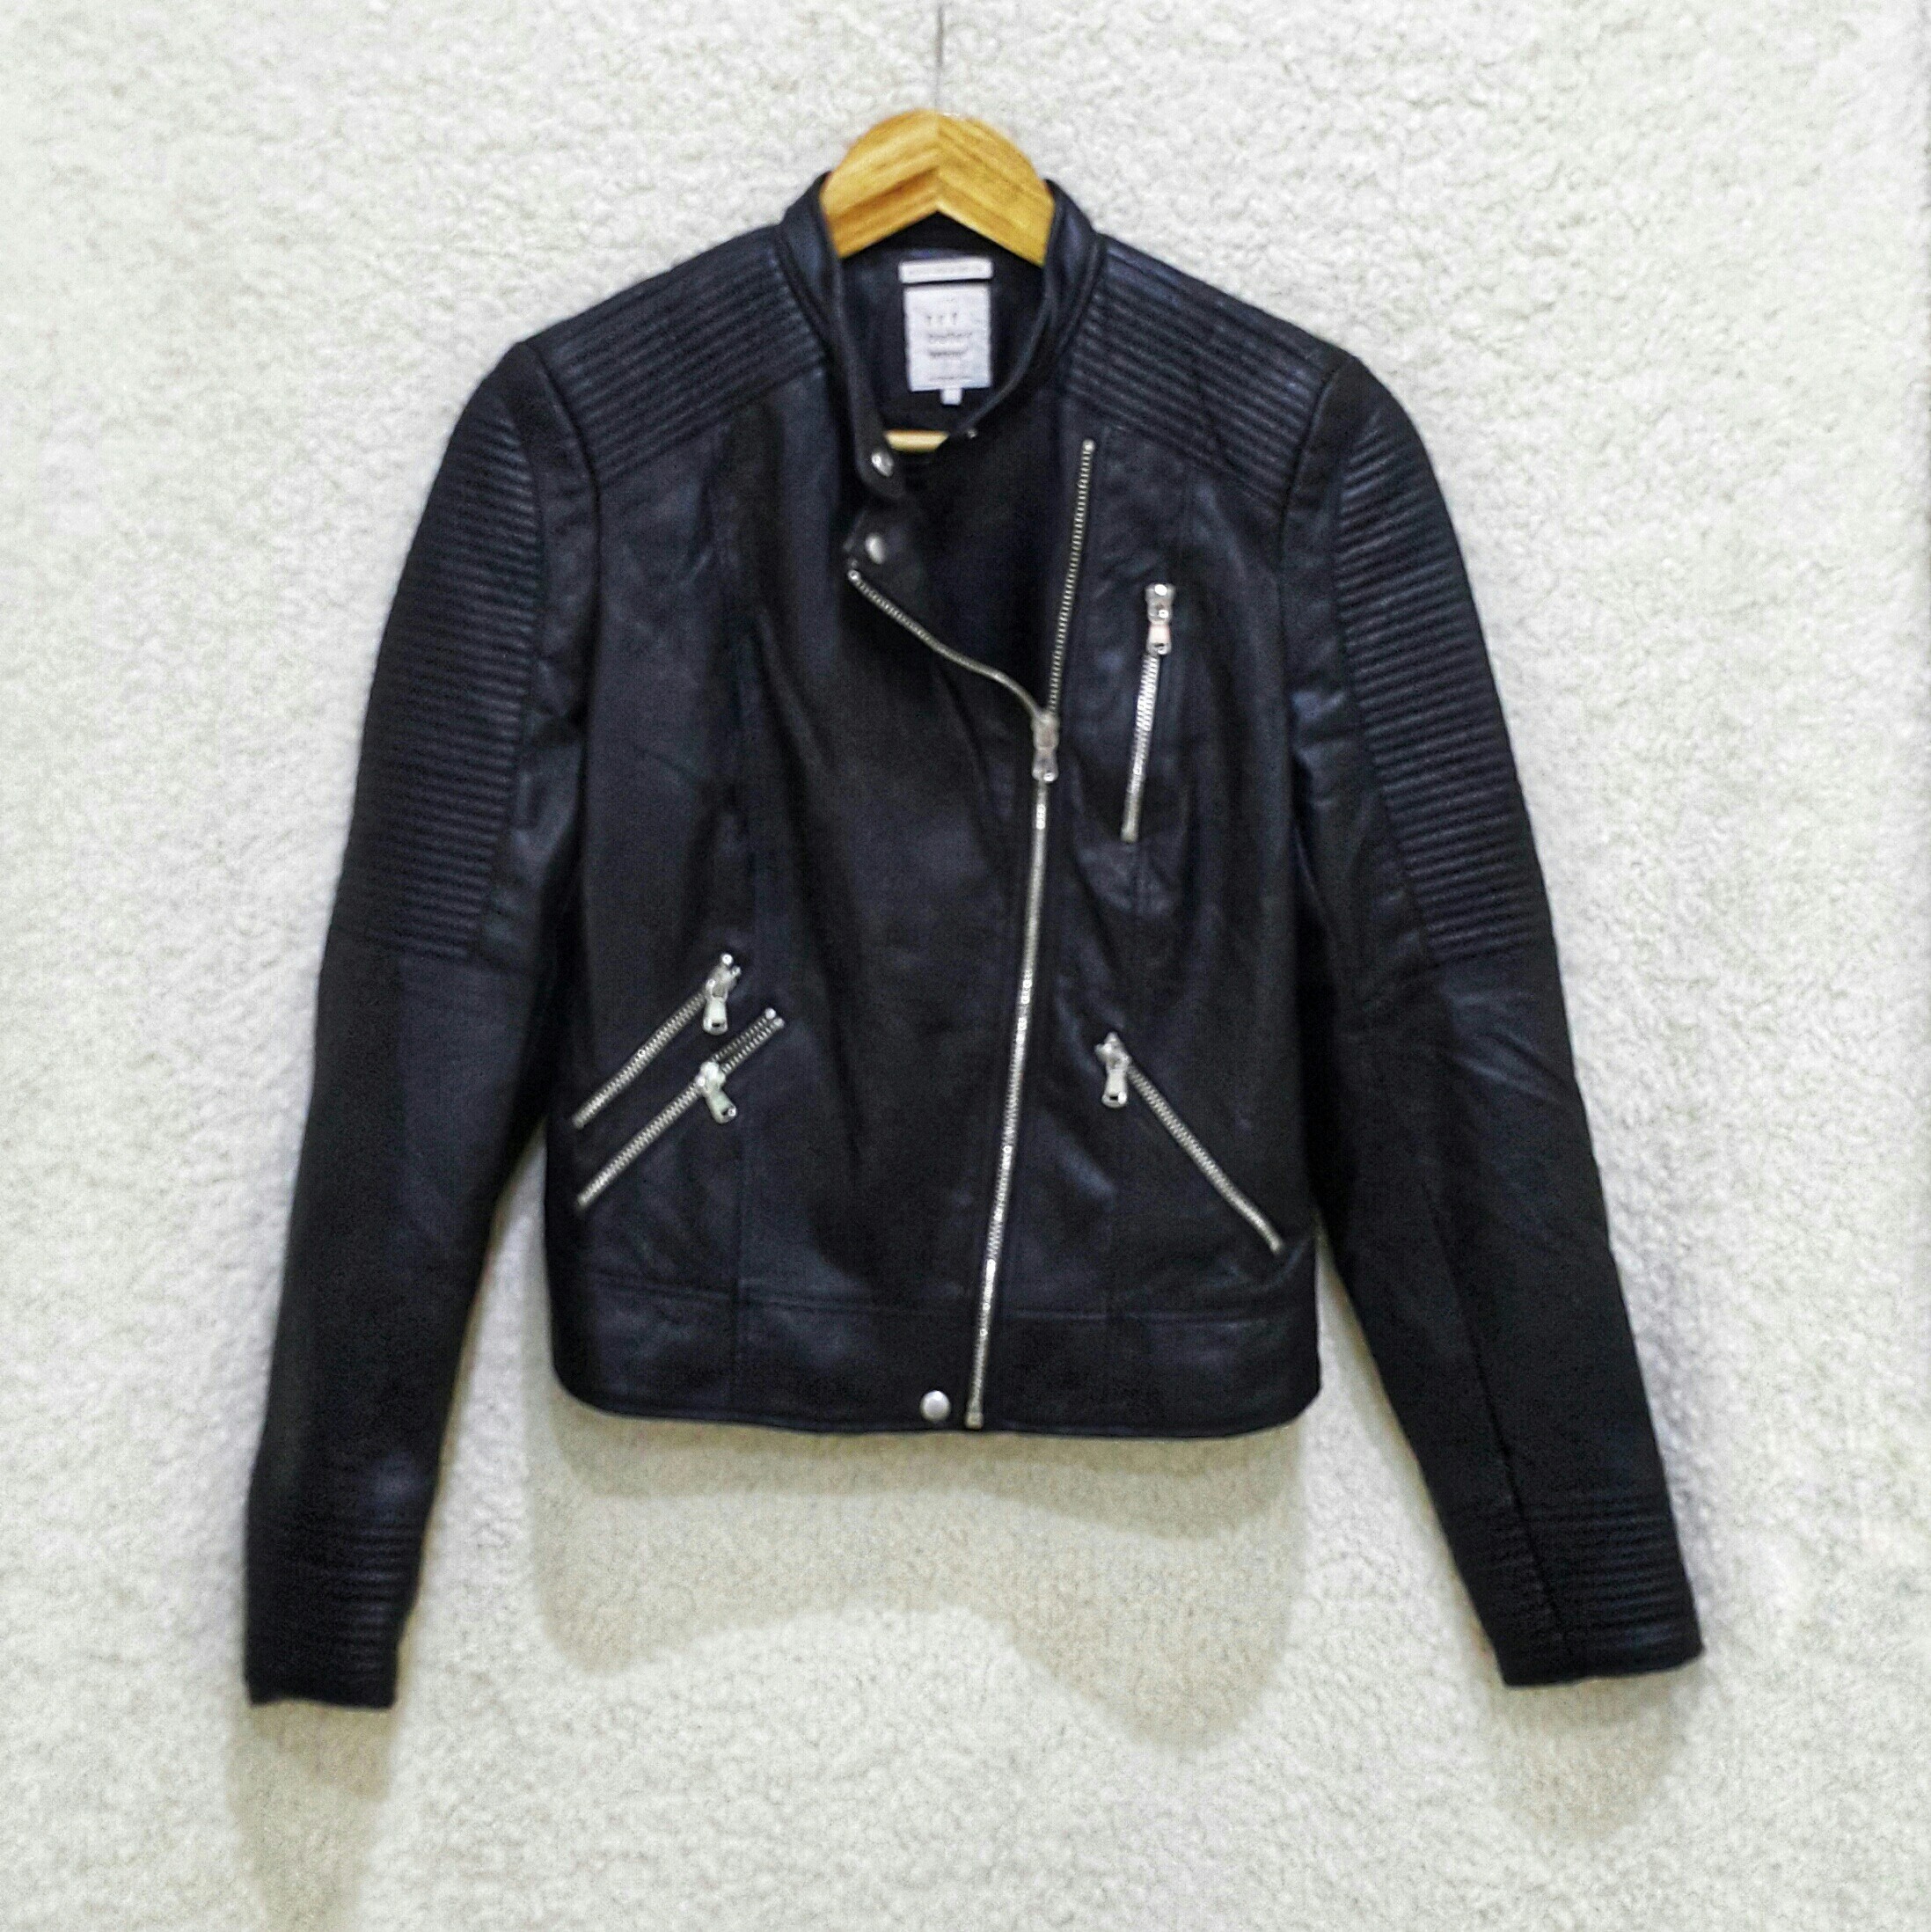 zara trafaluc outerwear leather jacket